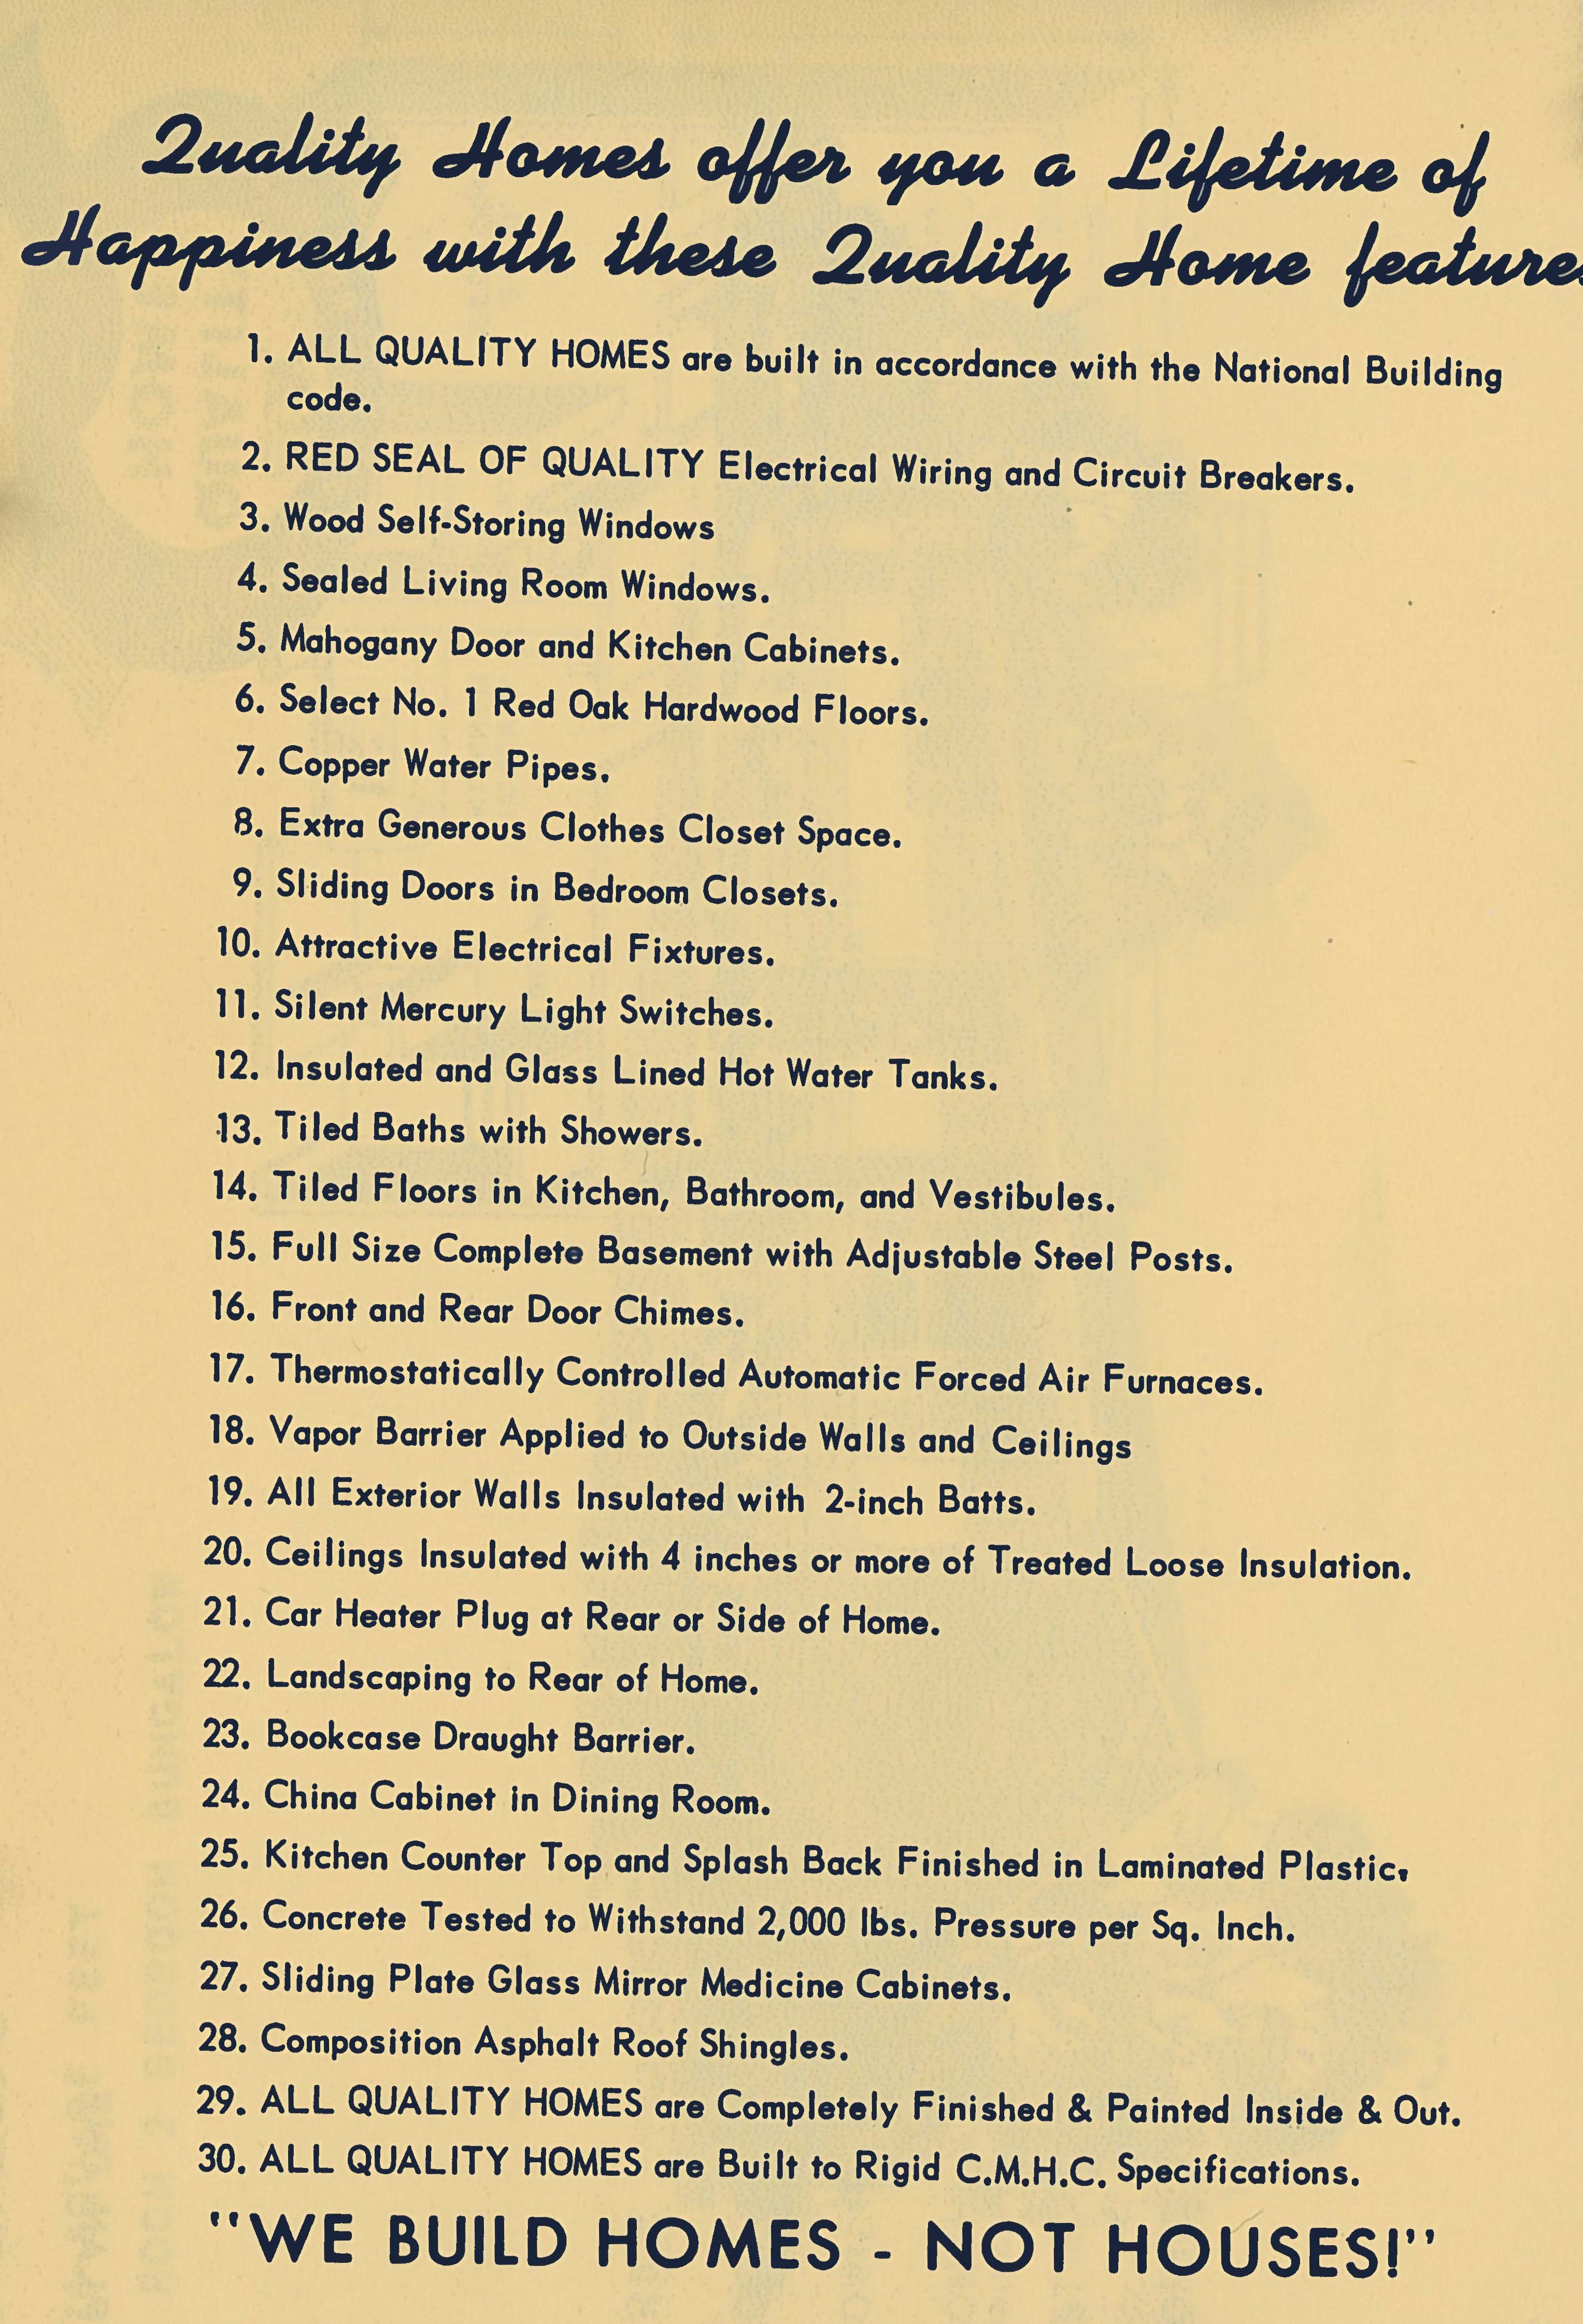 1960's Home features brochure